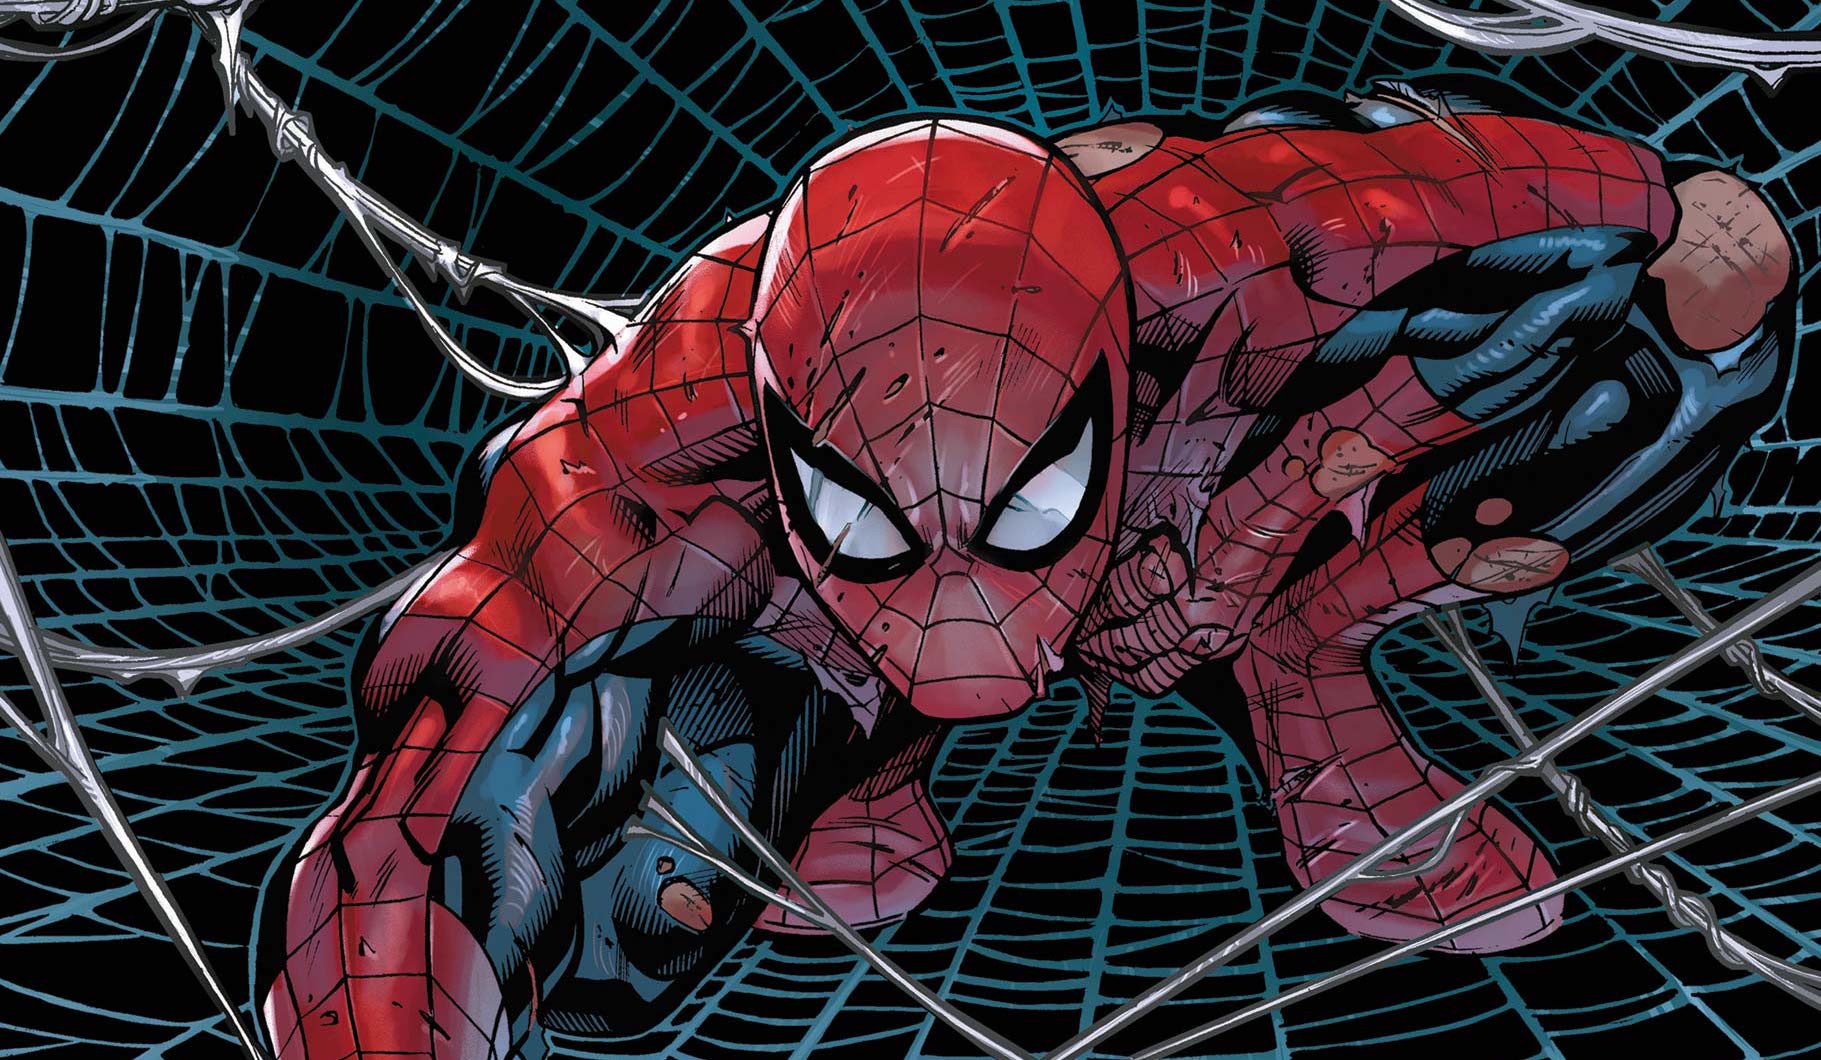 'Amazing Spider-Man' #29 sure looks pretty